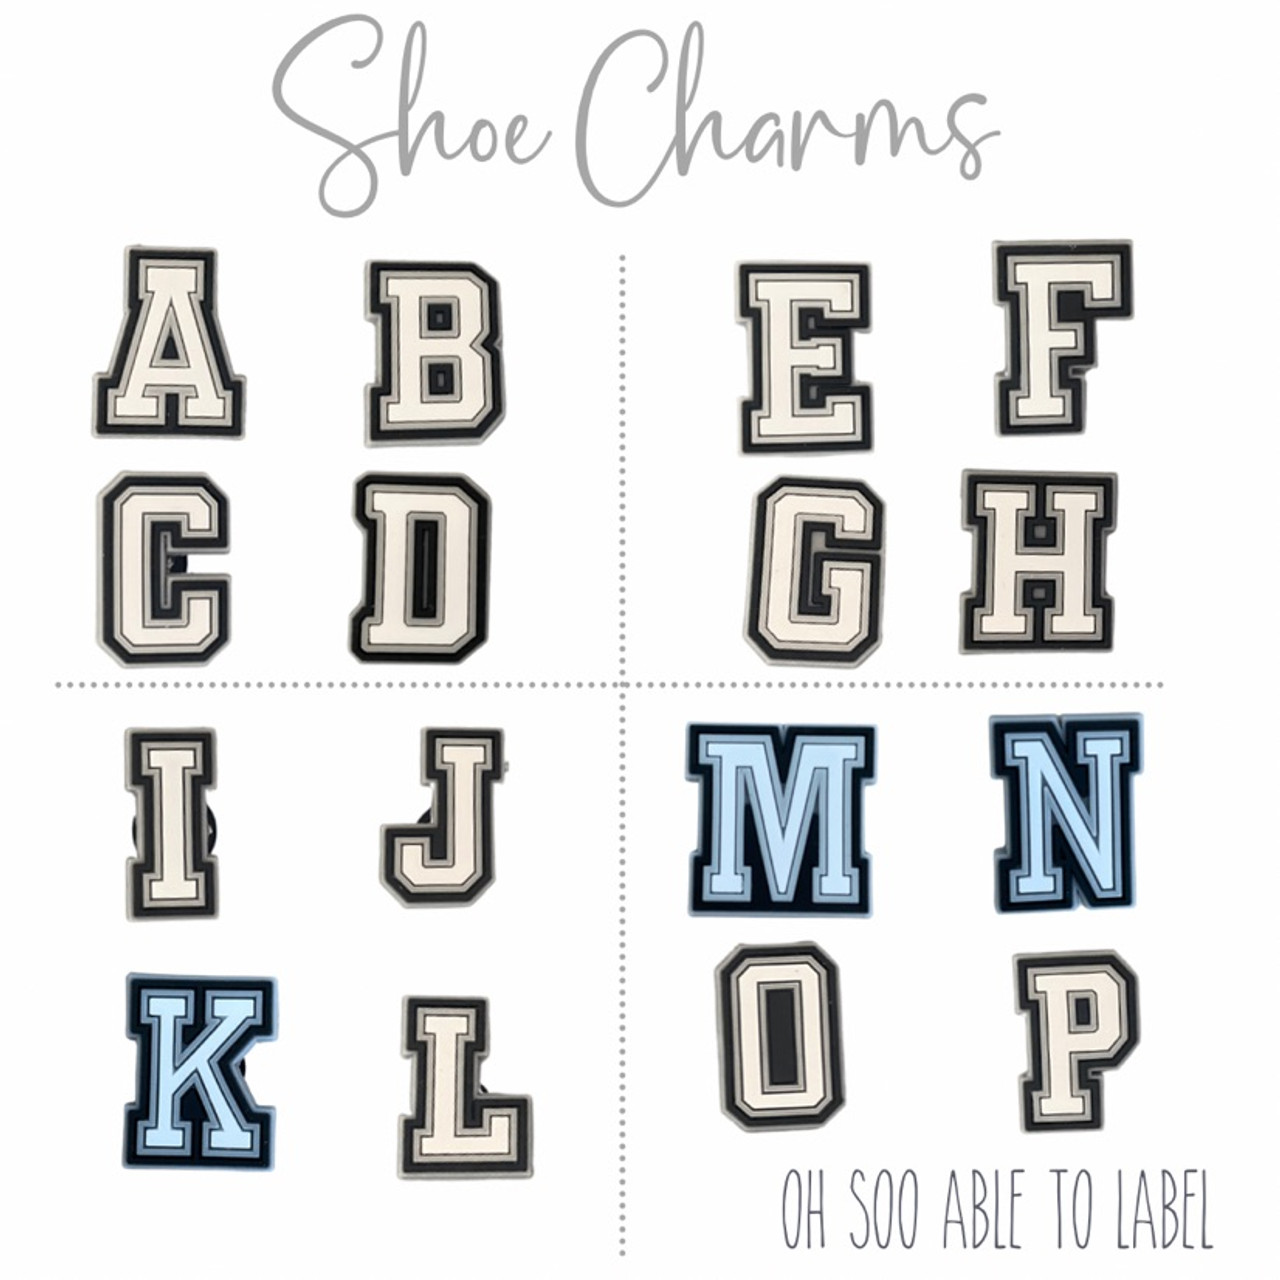 Letter V Jibbitz Shoe Charm - Crocs